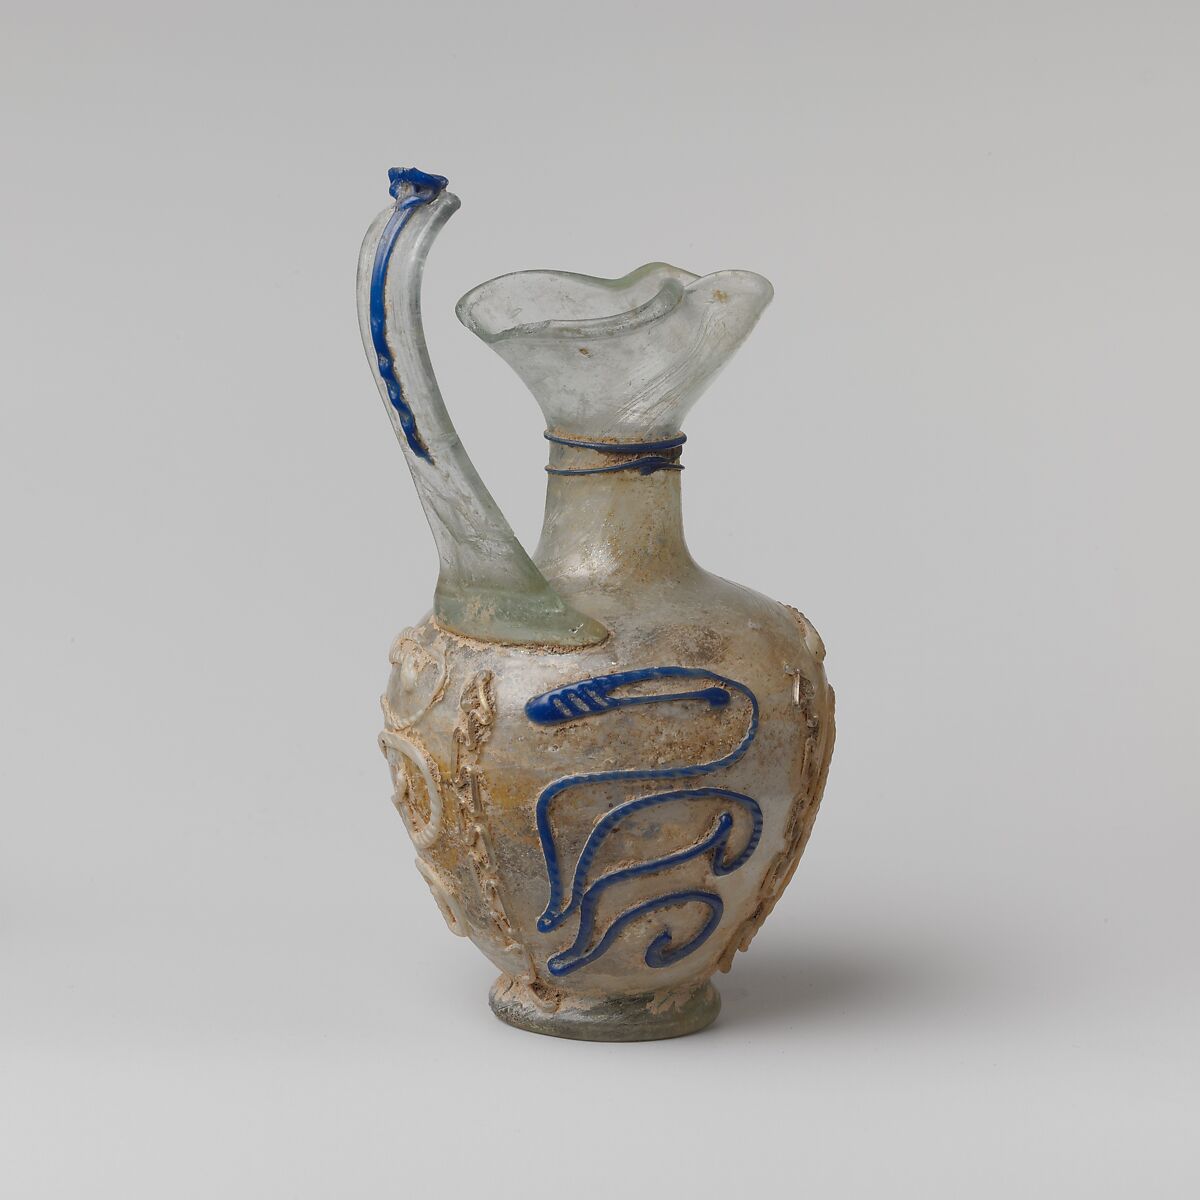 Glass jug (oinochoe) with snake-thread decoration, Glass, Roman, Rhineland 